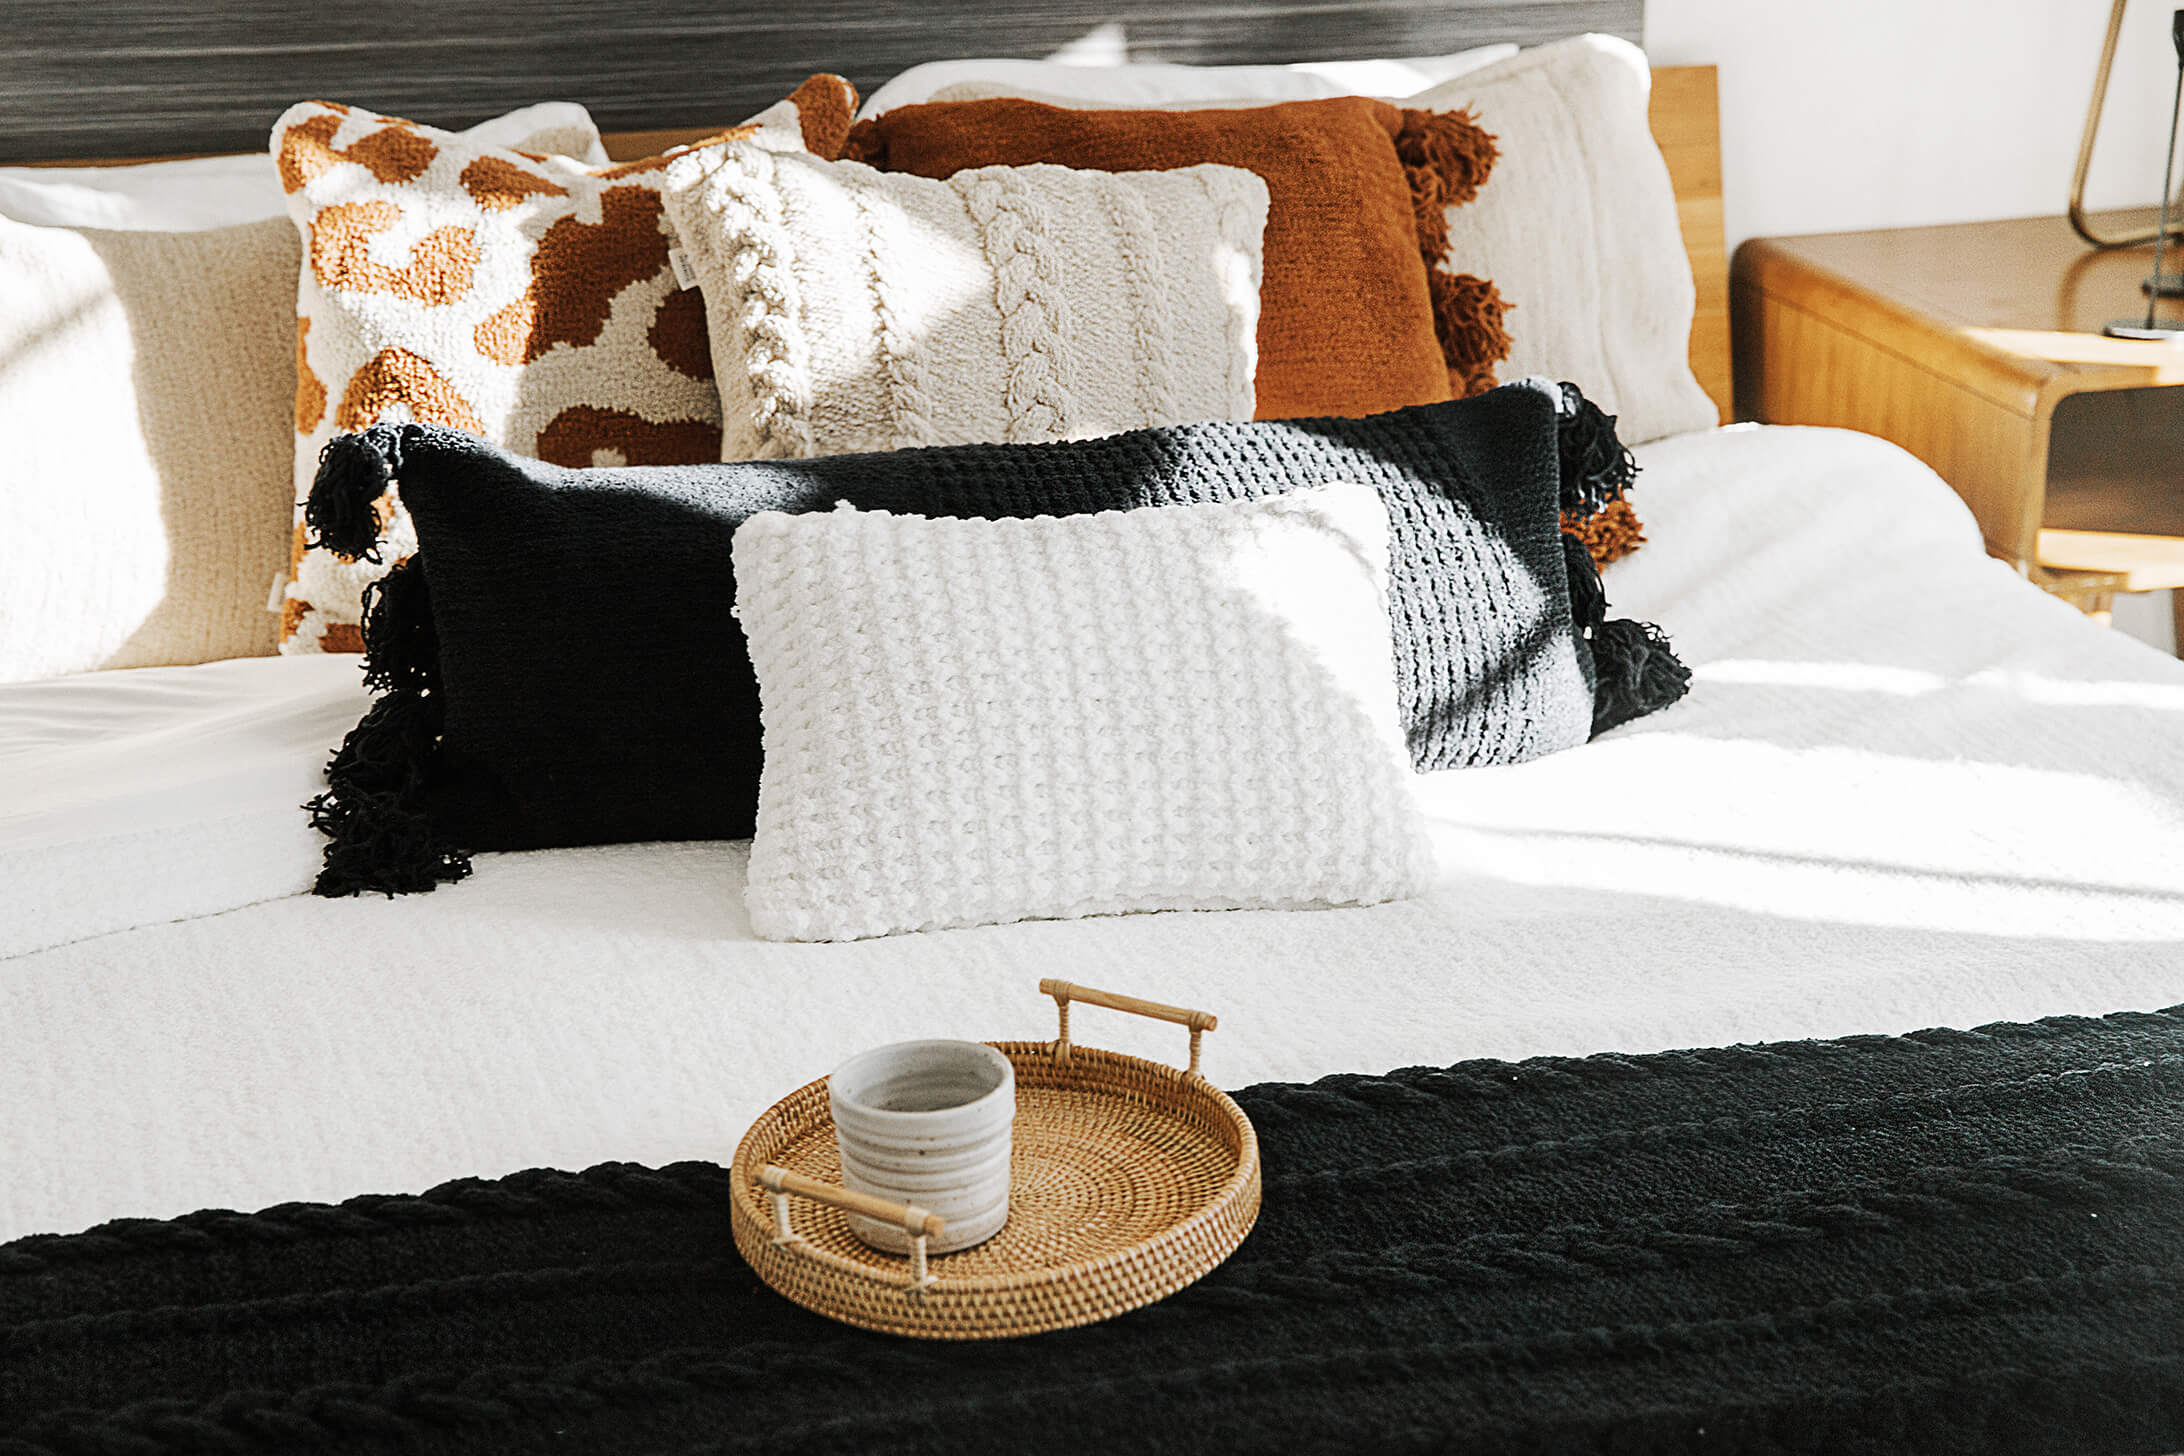 Black, White, and Tan bedding. Mixed neutral color bedroom. Boho bedroom inspo. Boho decor pillows